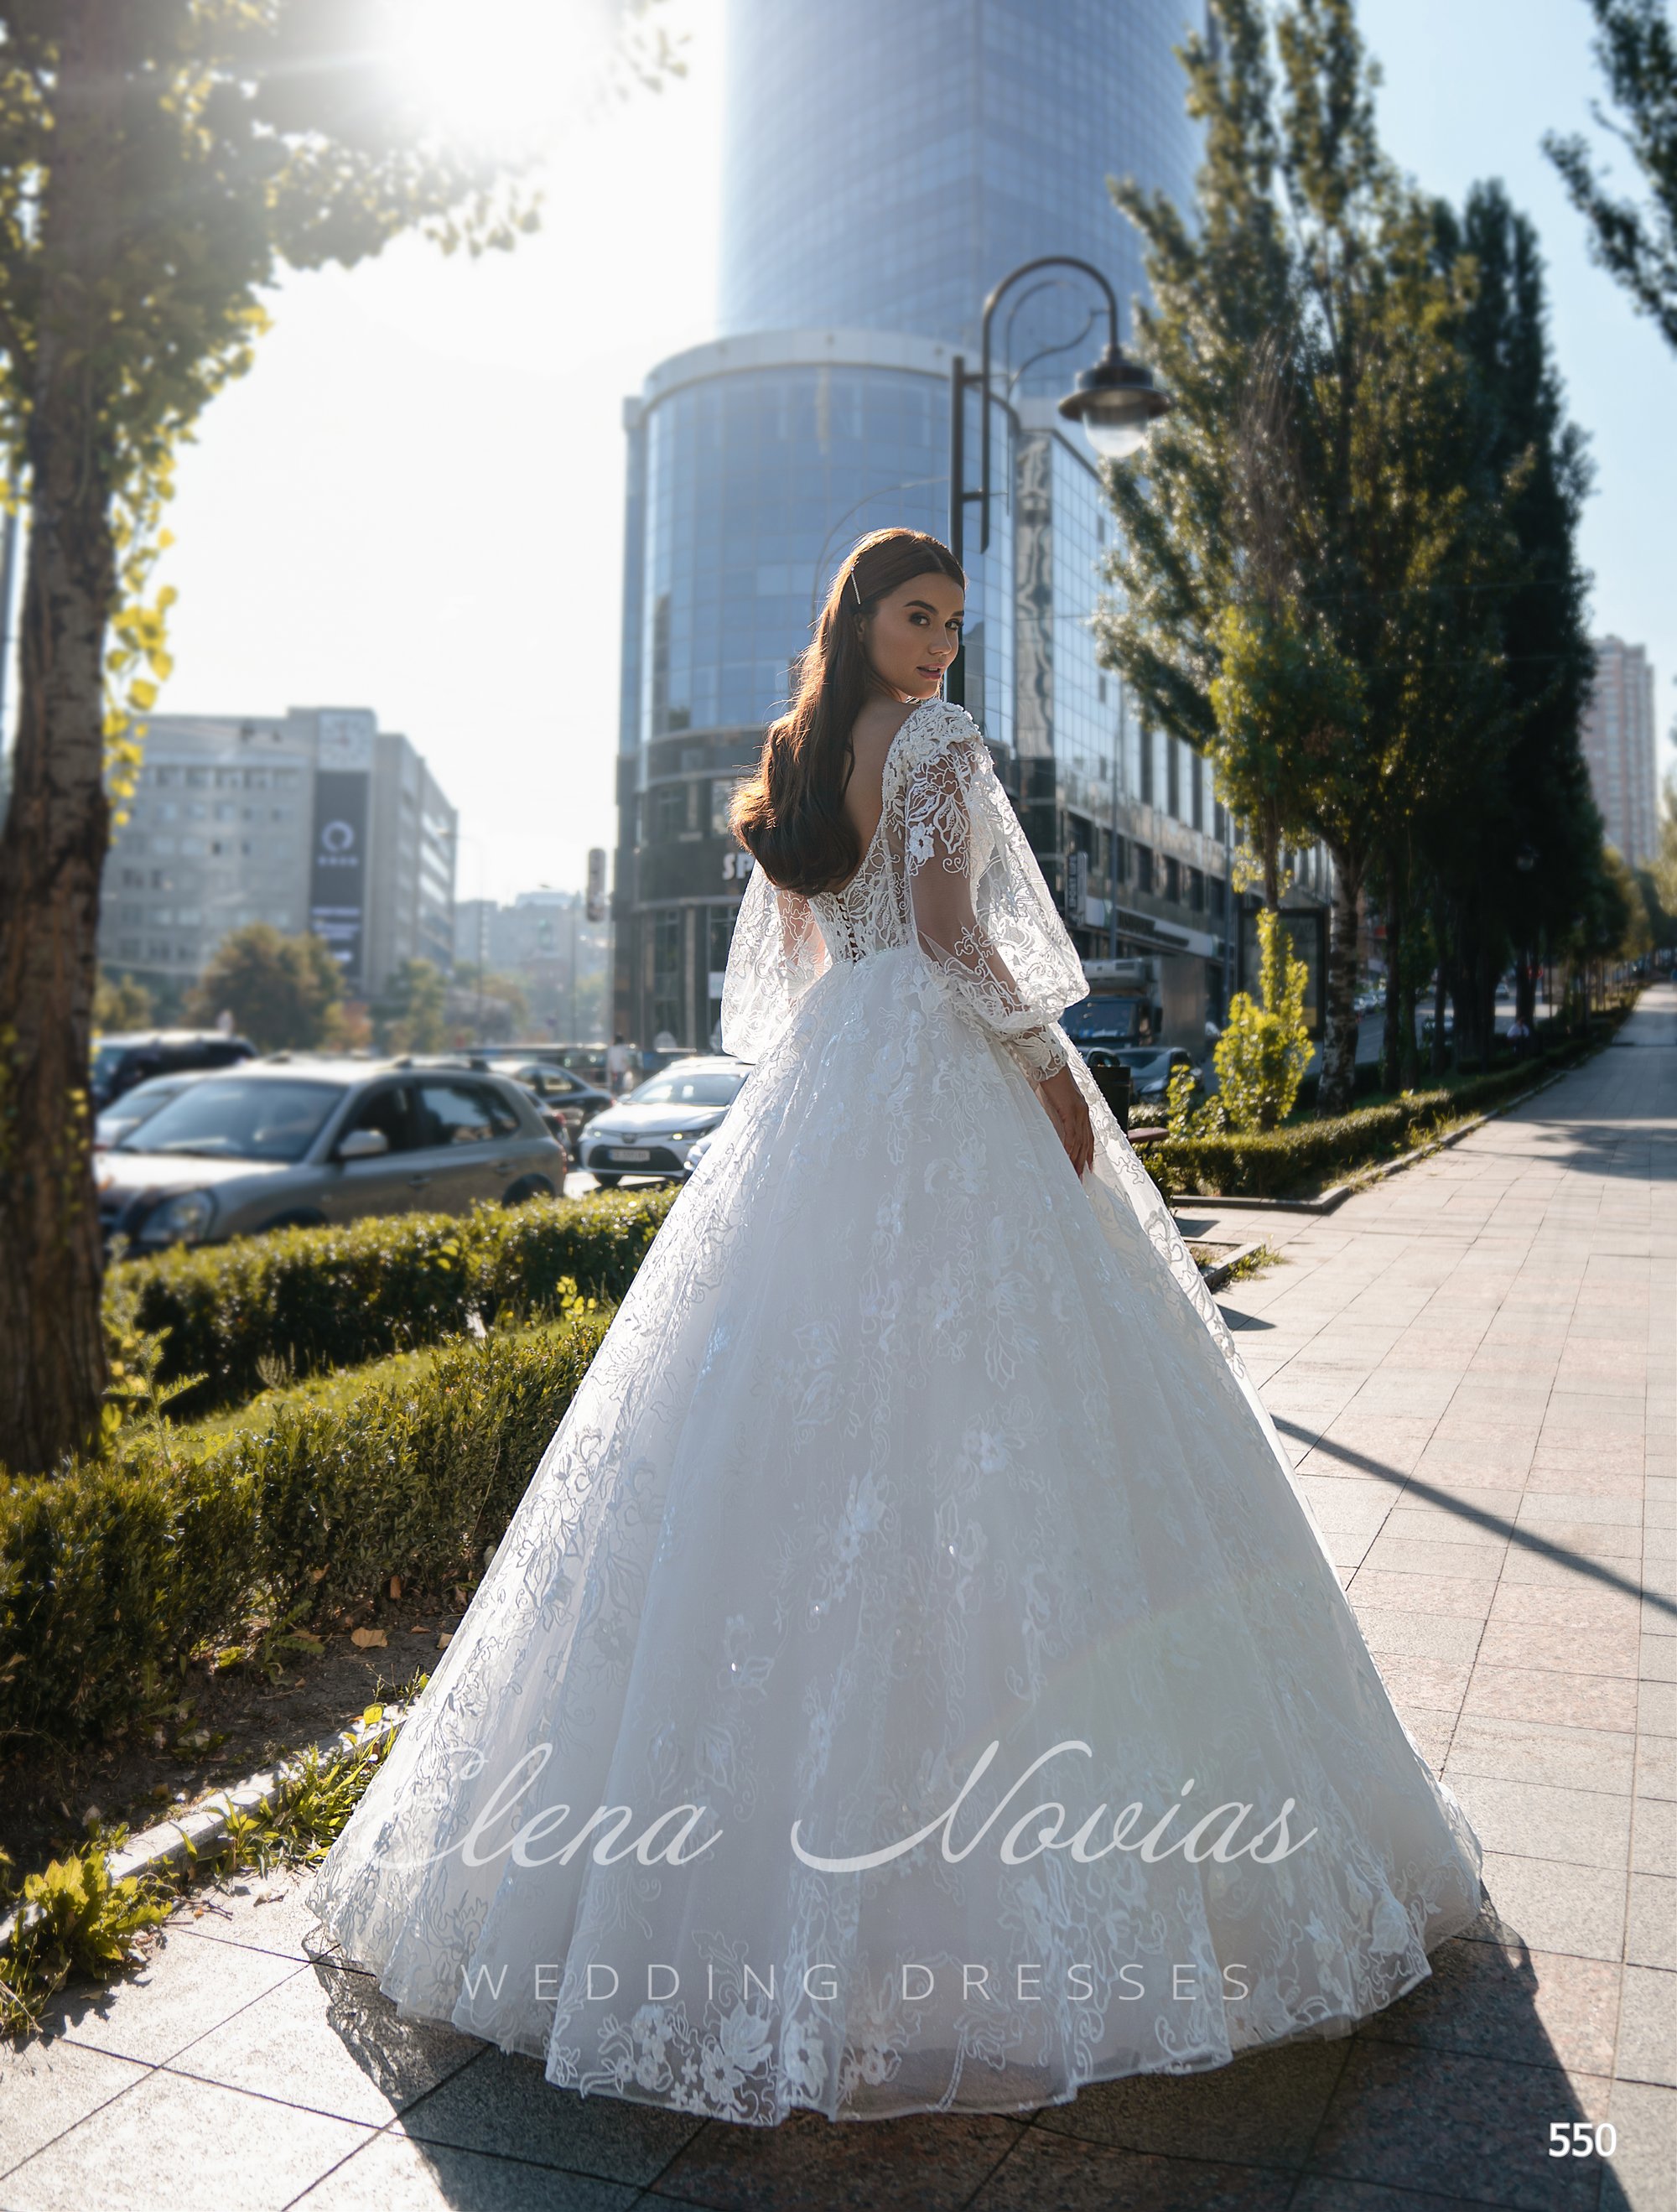 Wedding dresses 550 3